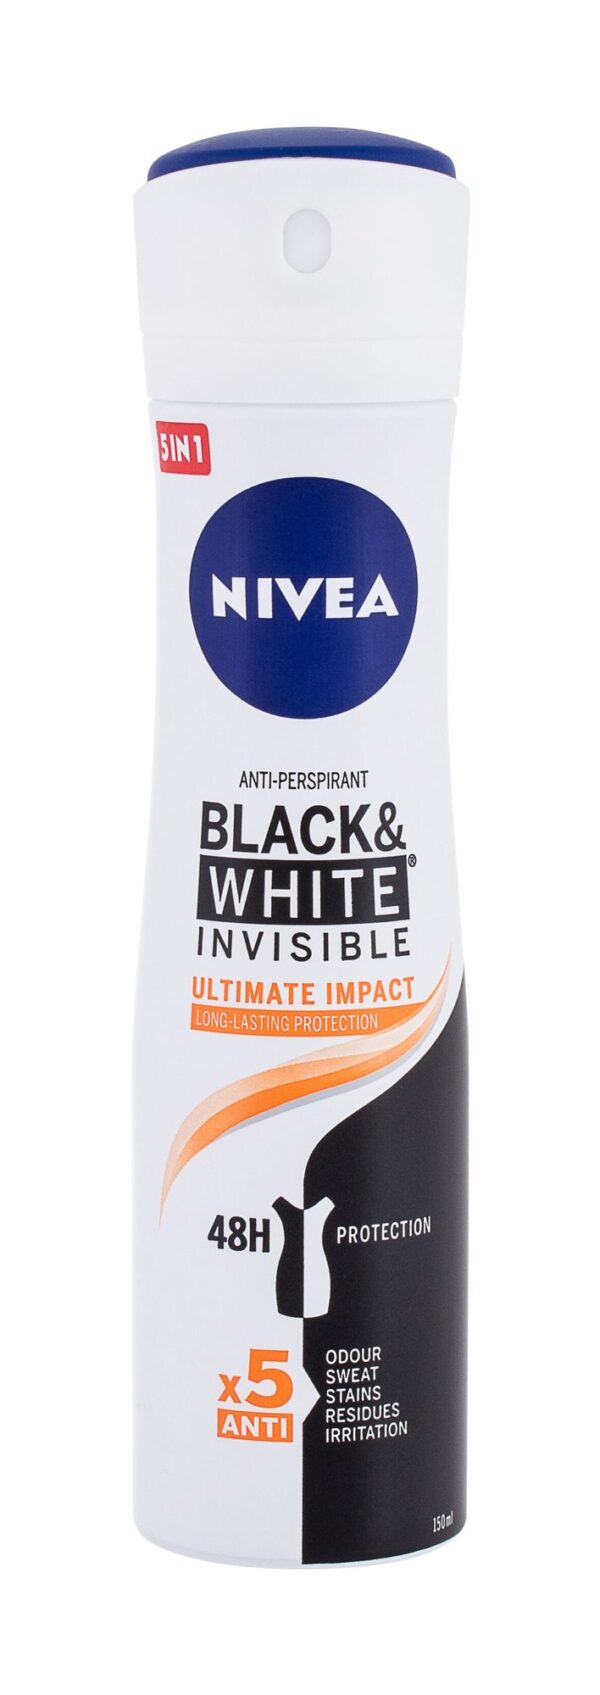 Antyperspirant Nivea Black & White Invisible